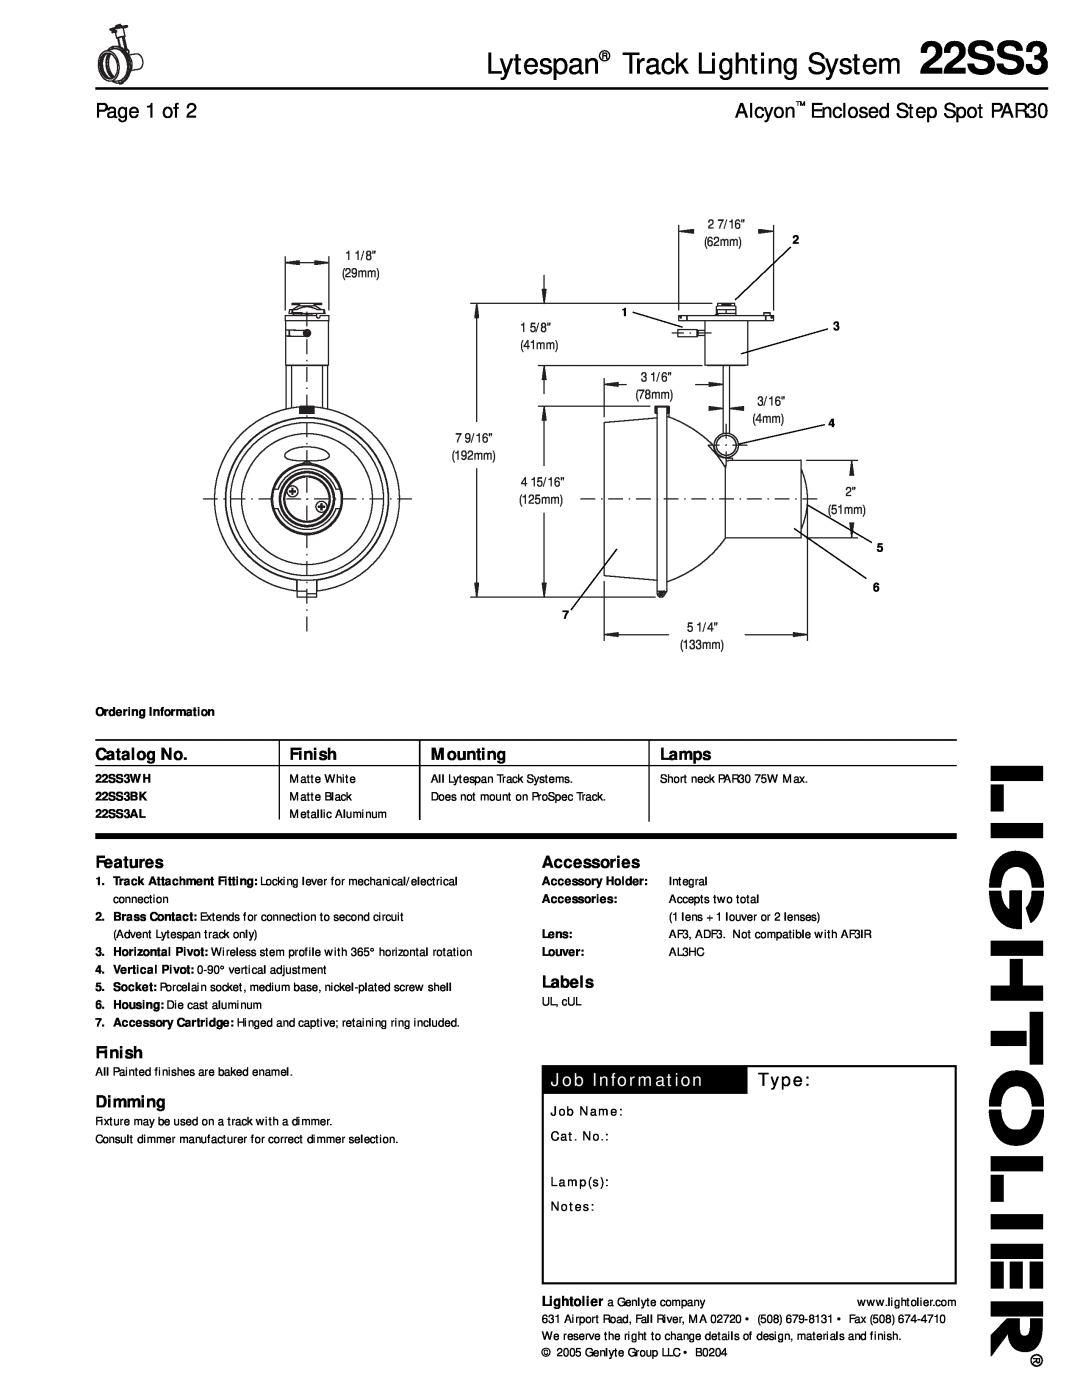 Lightolier manual Lytespan Track Lighting System 22SS3, Page 1 of, Alcyon Enclosed Step Spot PAR30, Catalog No, Finish 